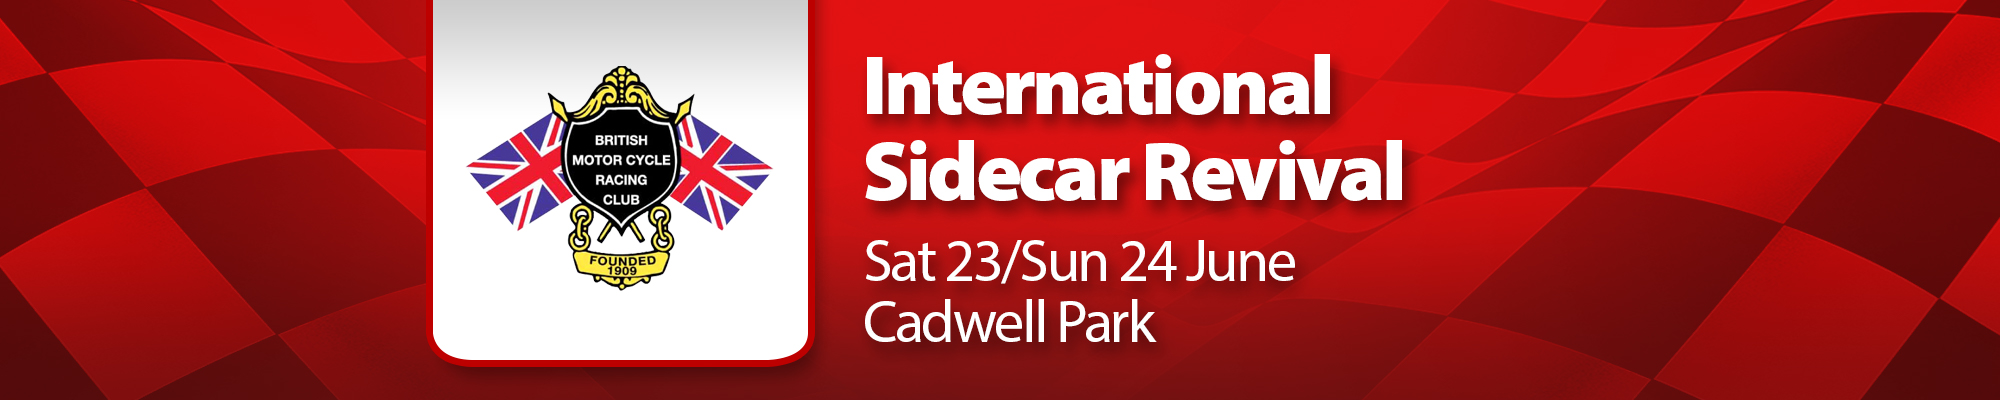 International Sidecar Revival